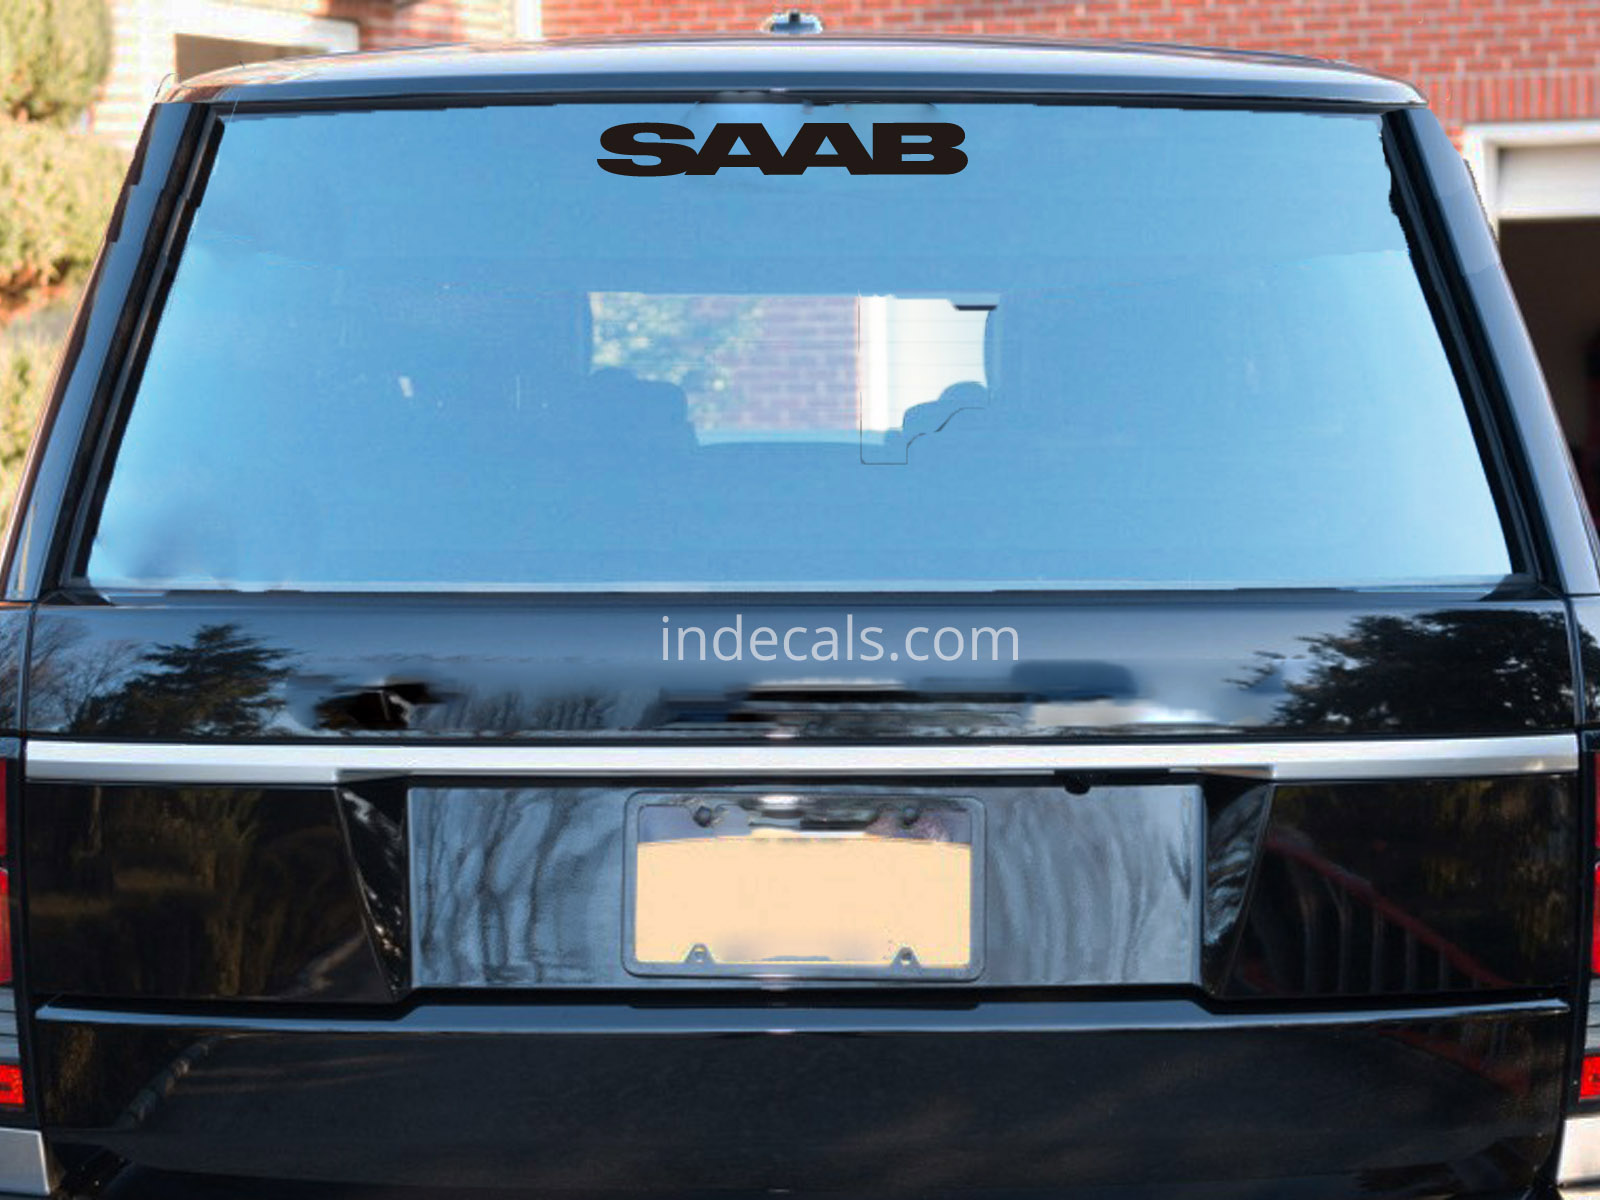 1 x Saab Sticker for Windshield or Back Window - Black